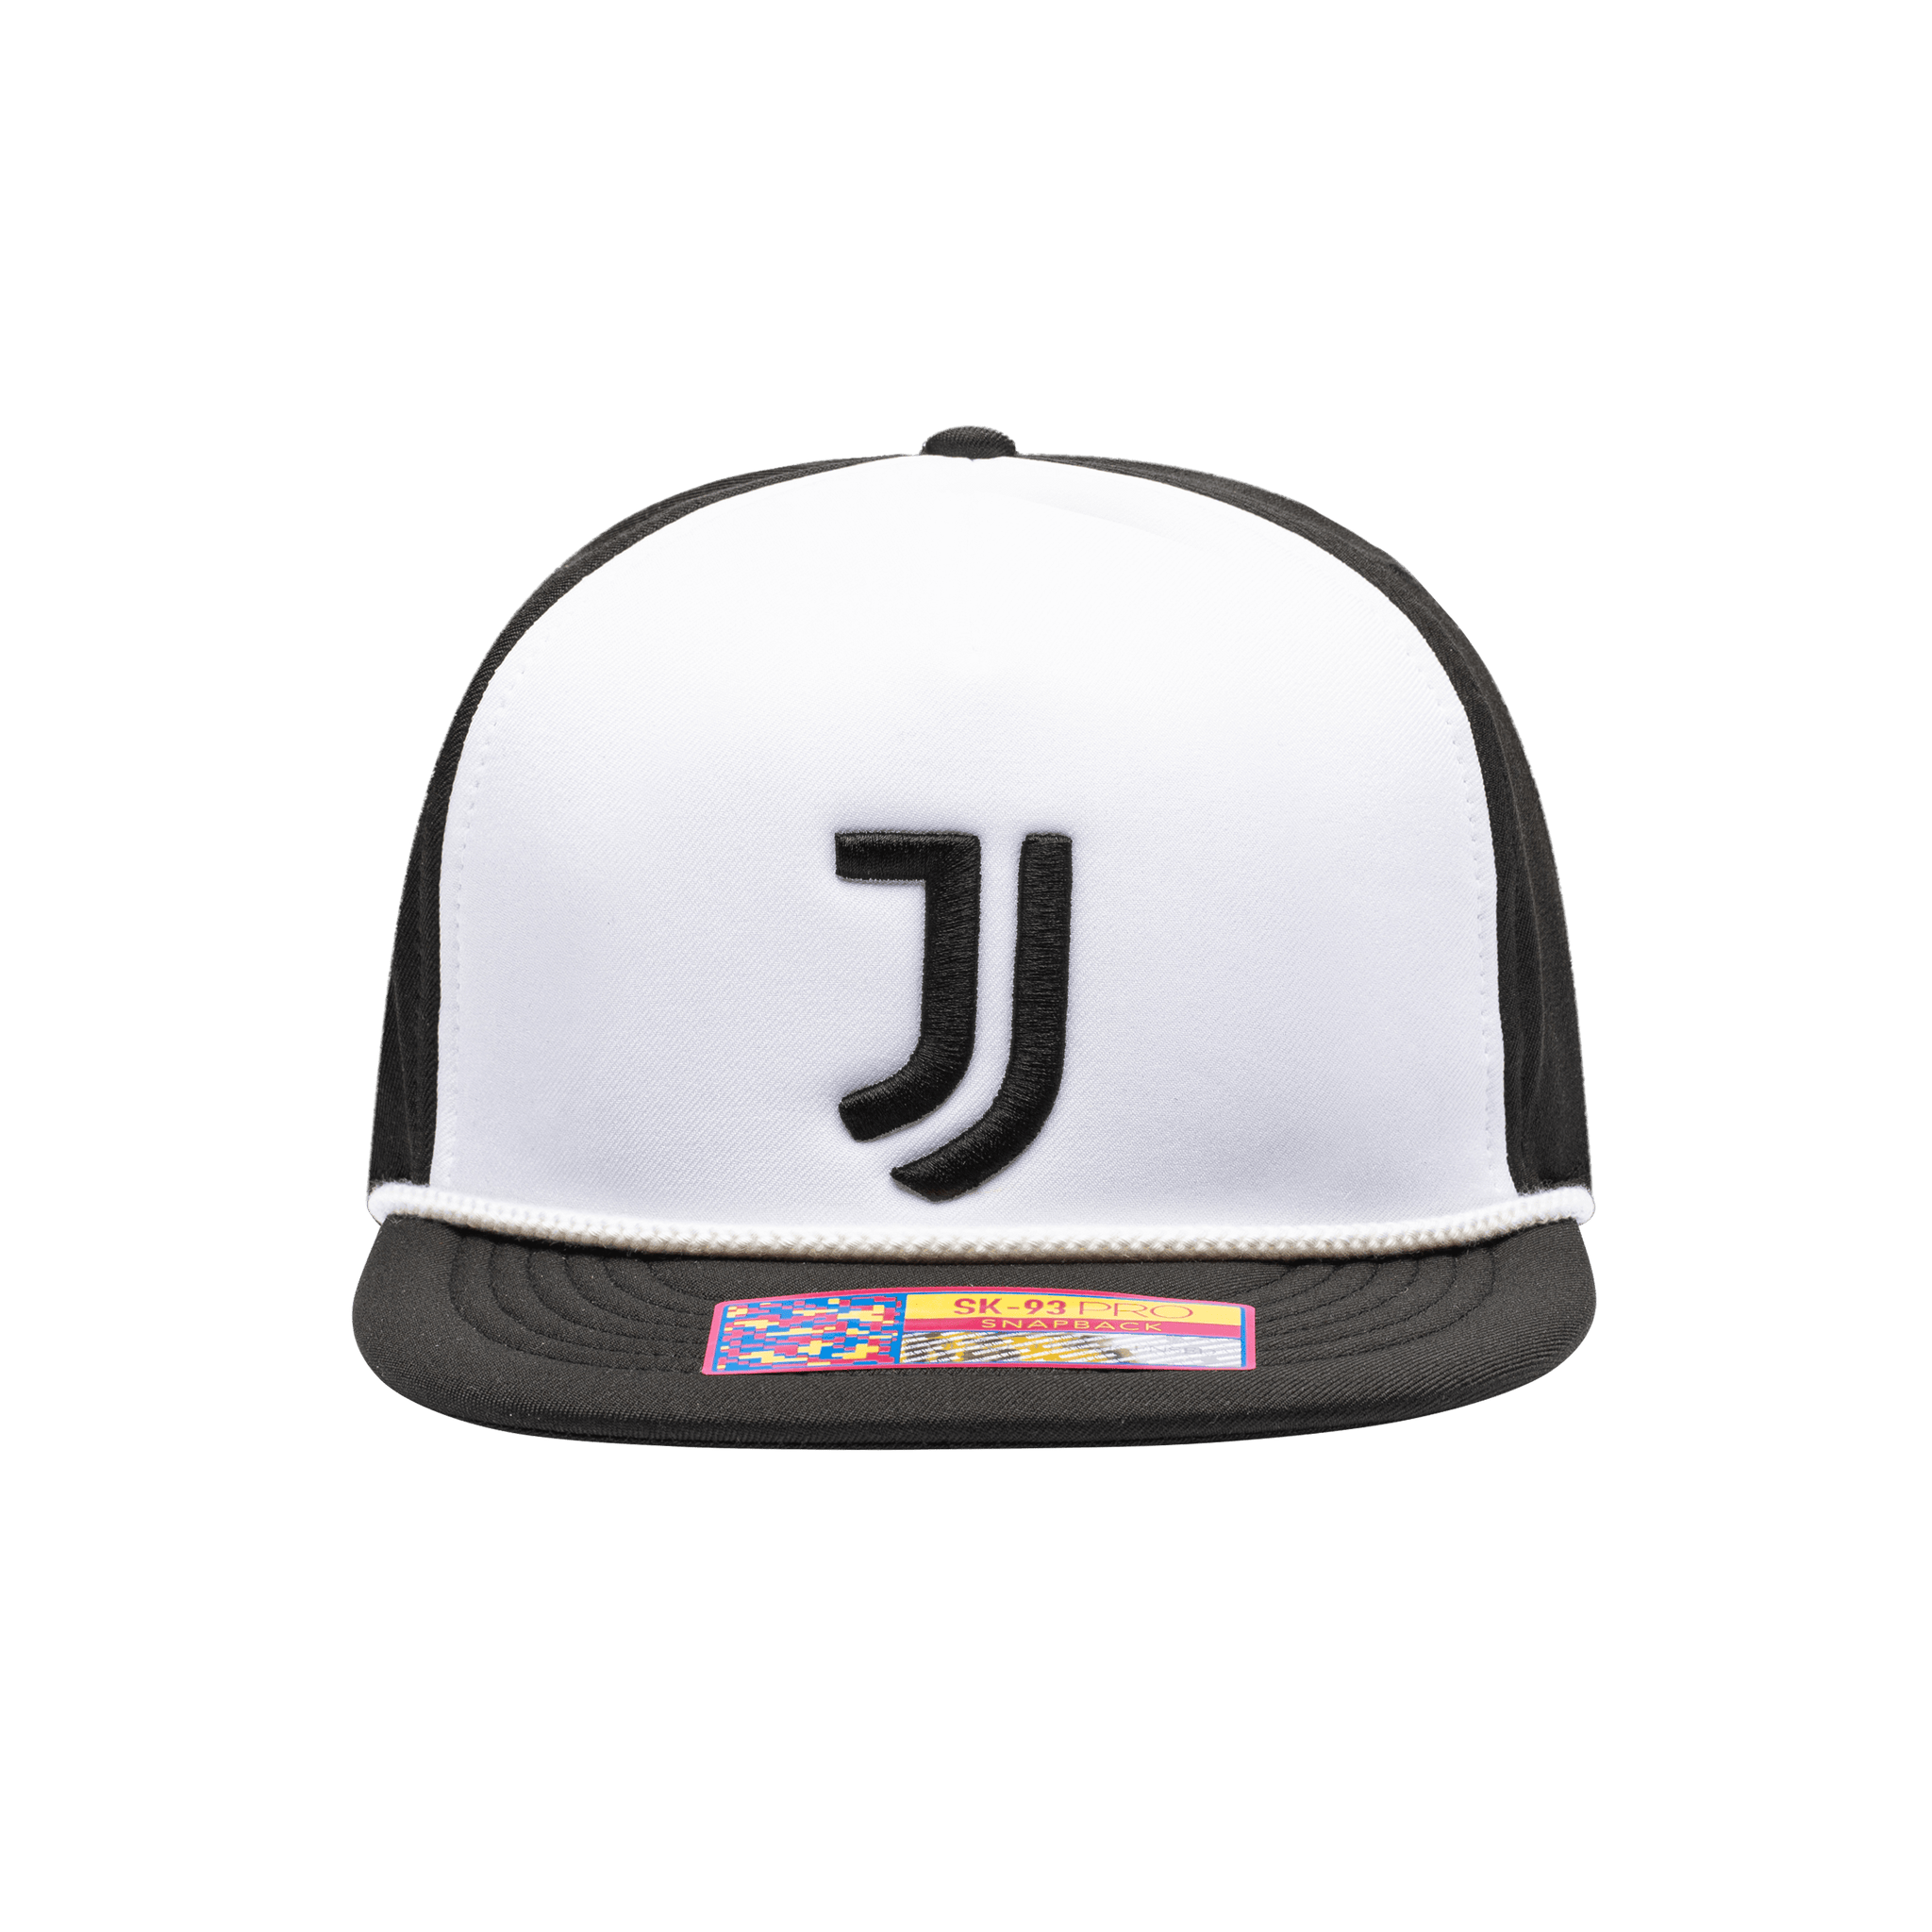 Juventus Avalanche Snapback Hat